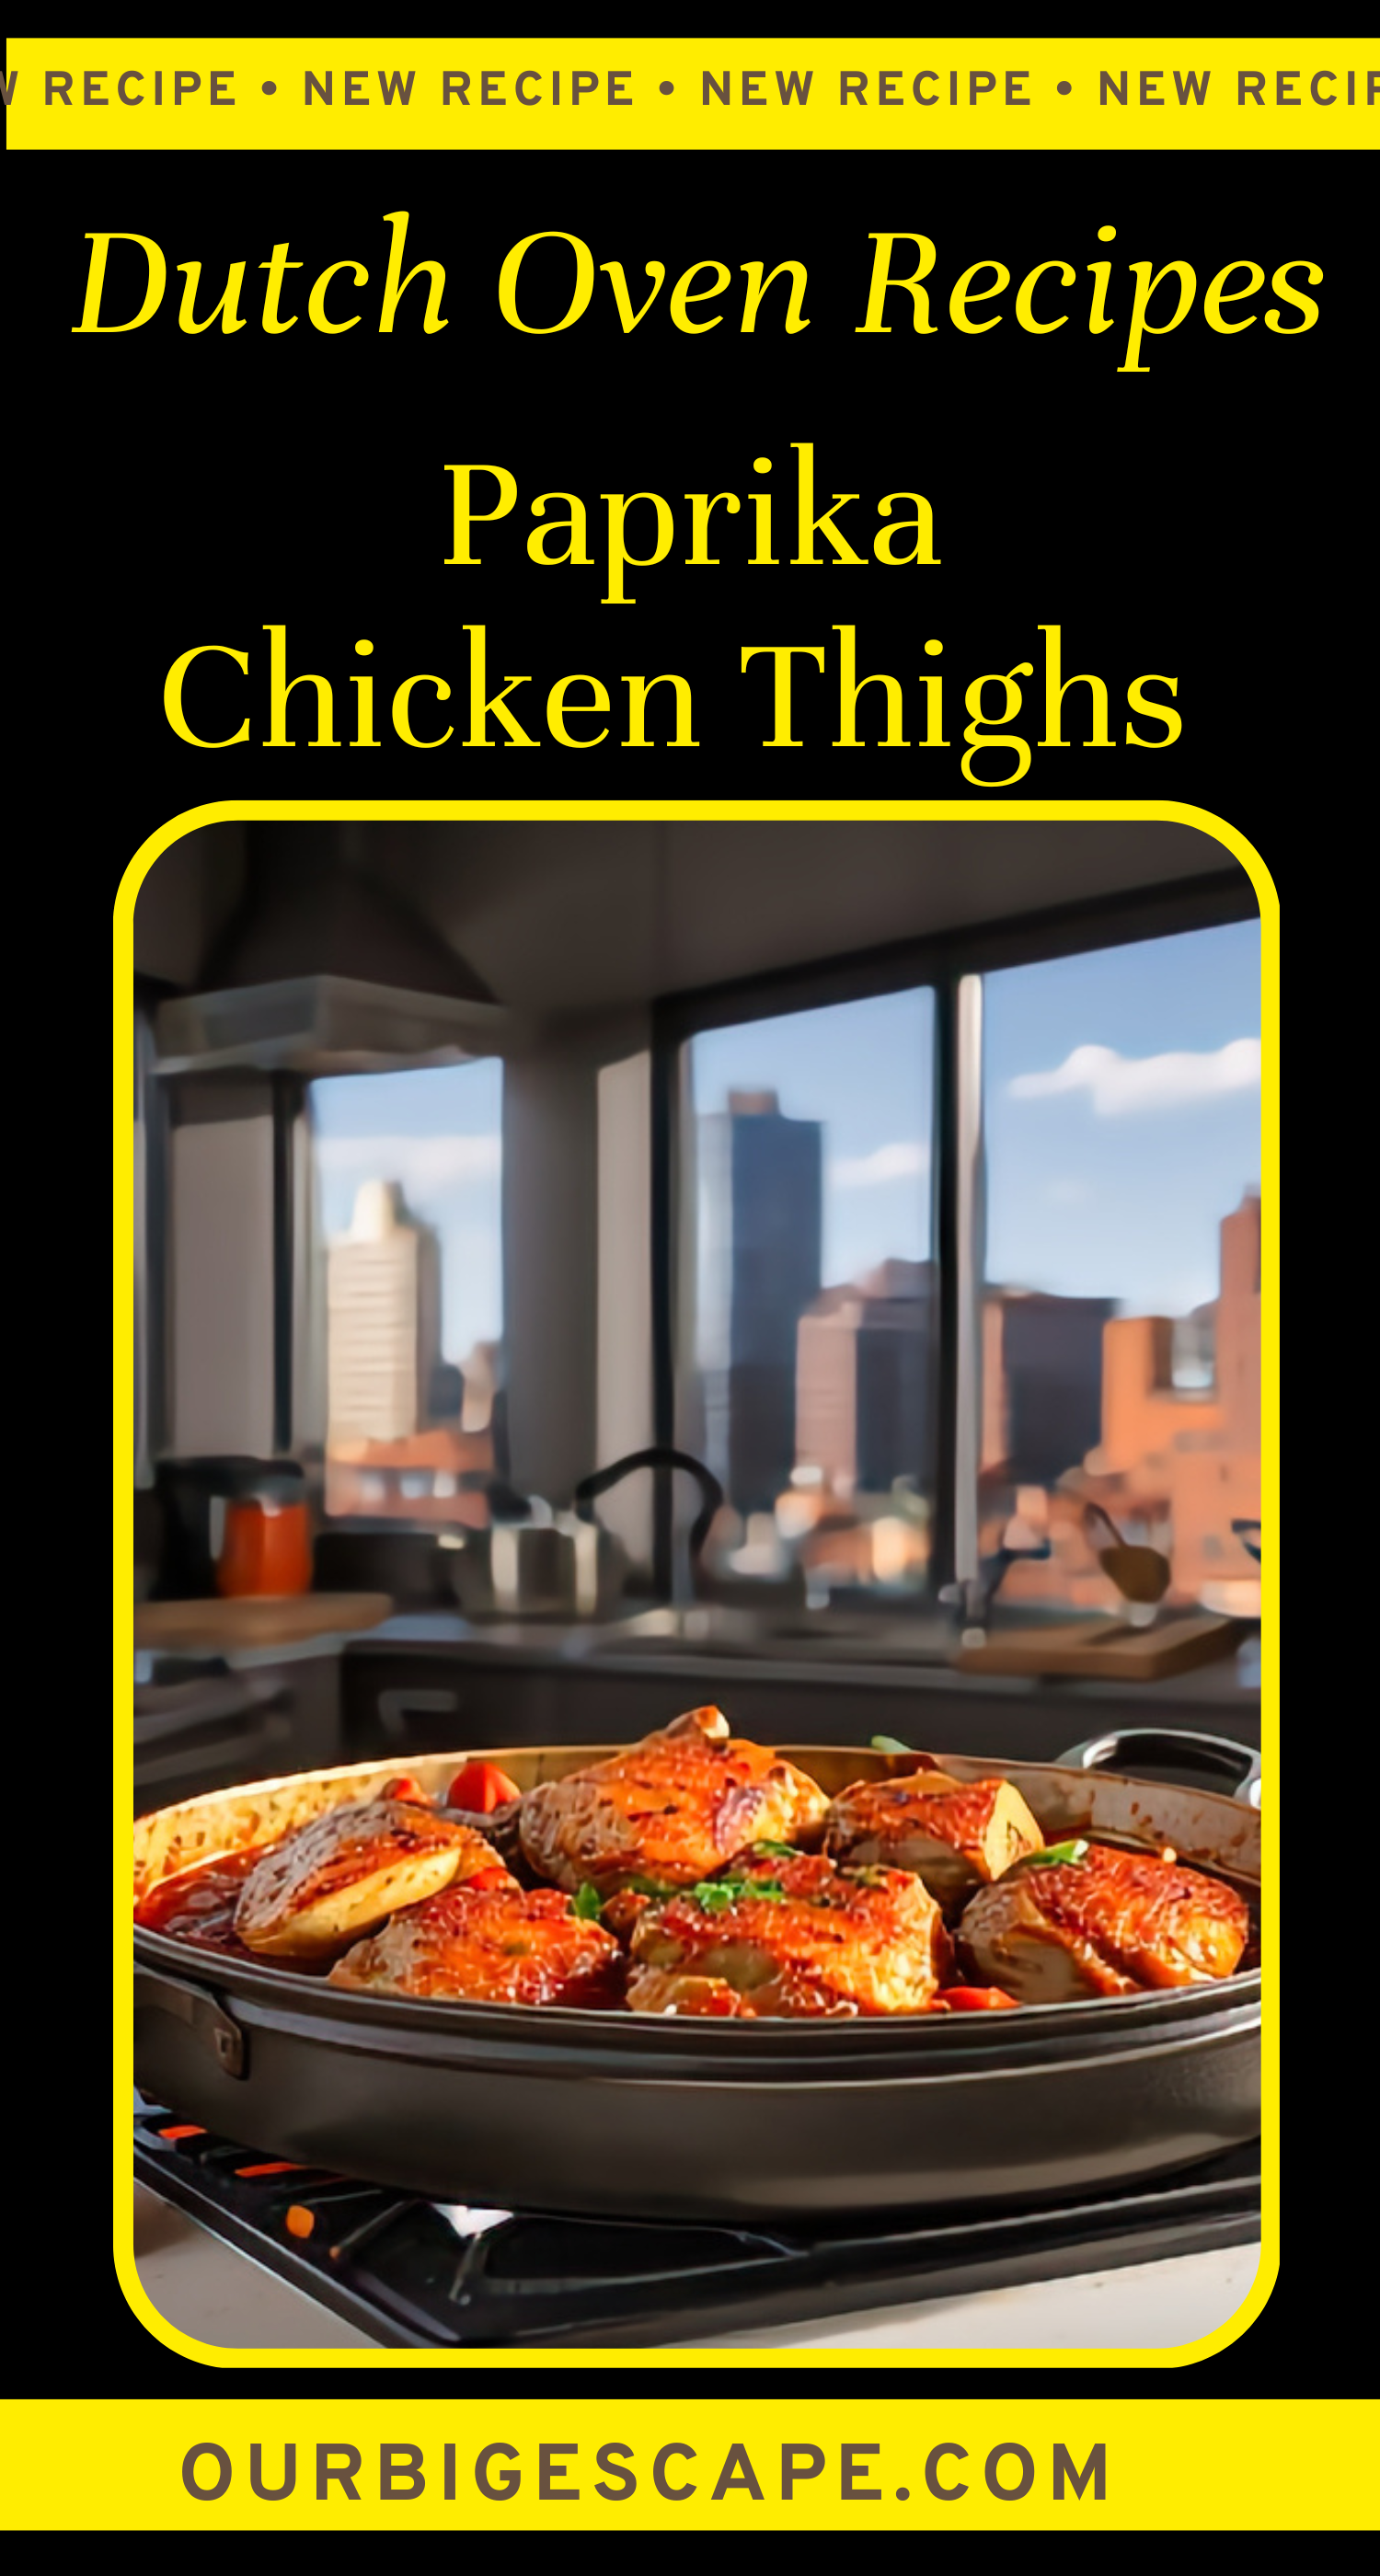 12. One-Pot Paprika Chicken Thighs Recipe